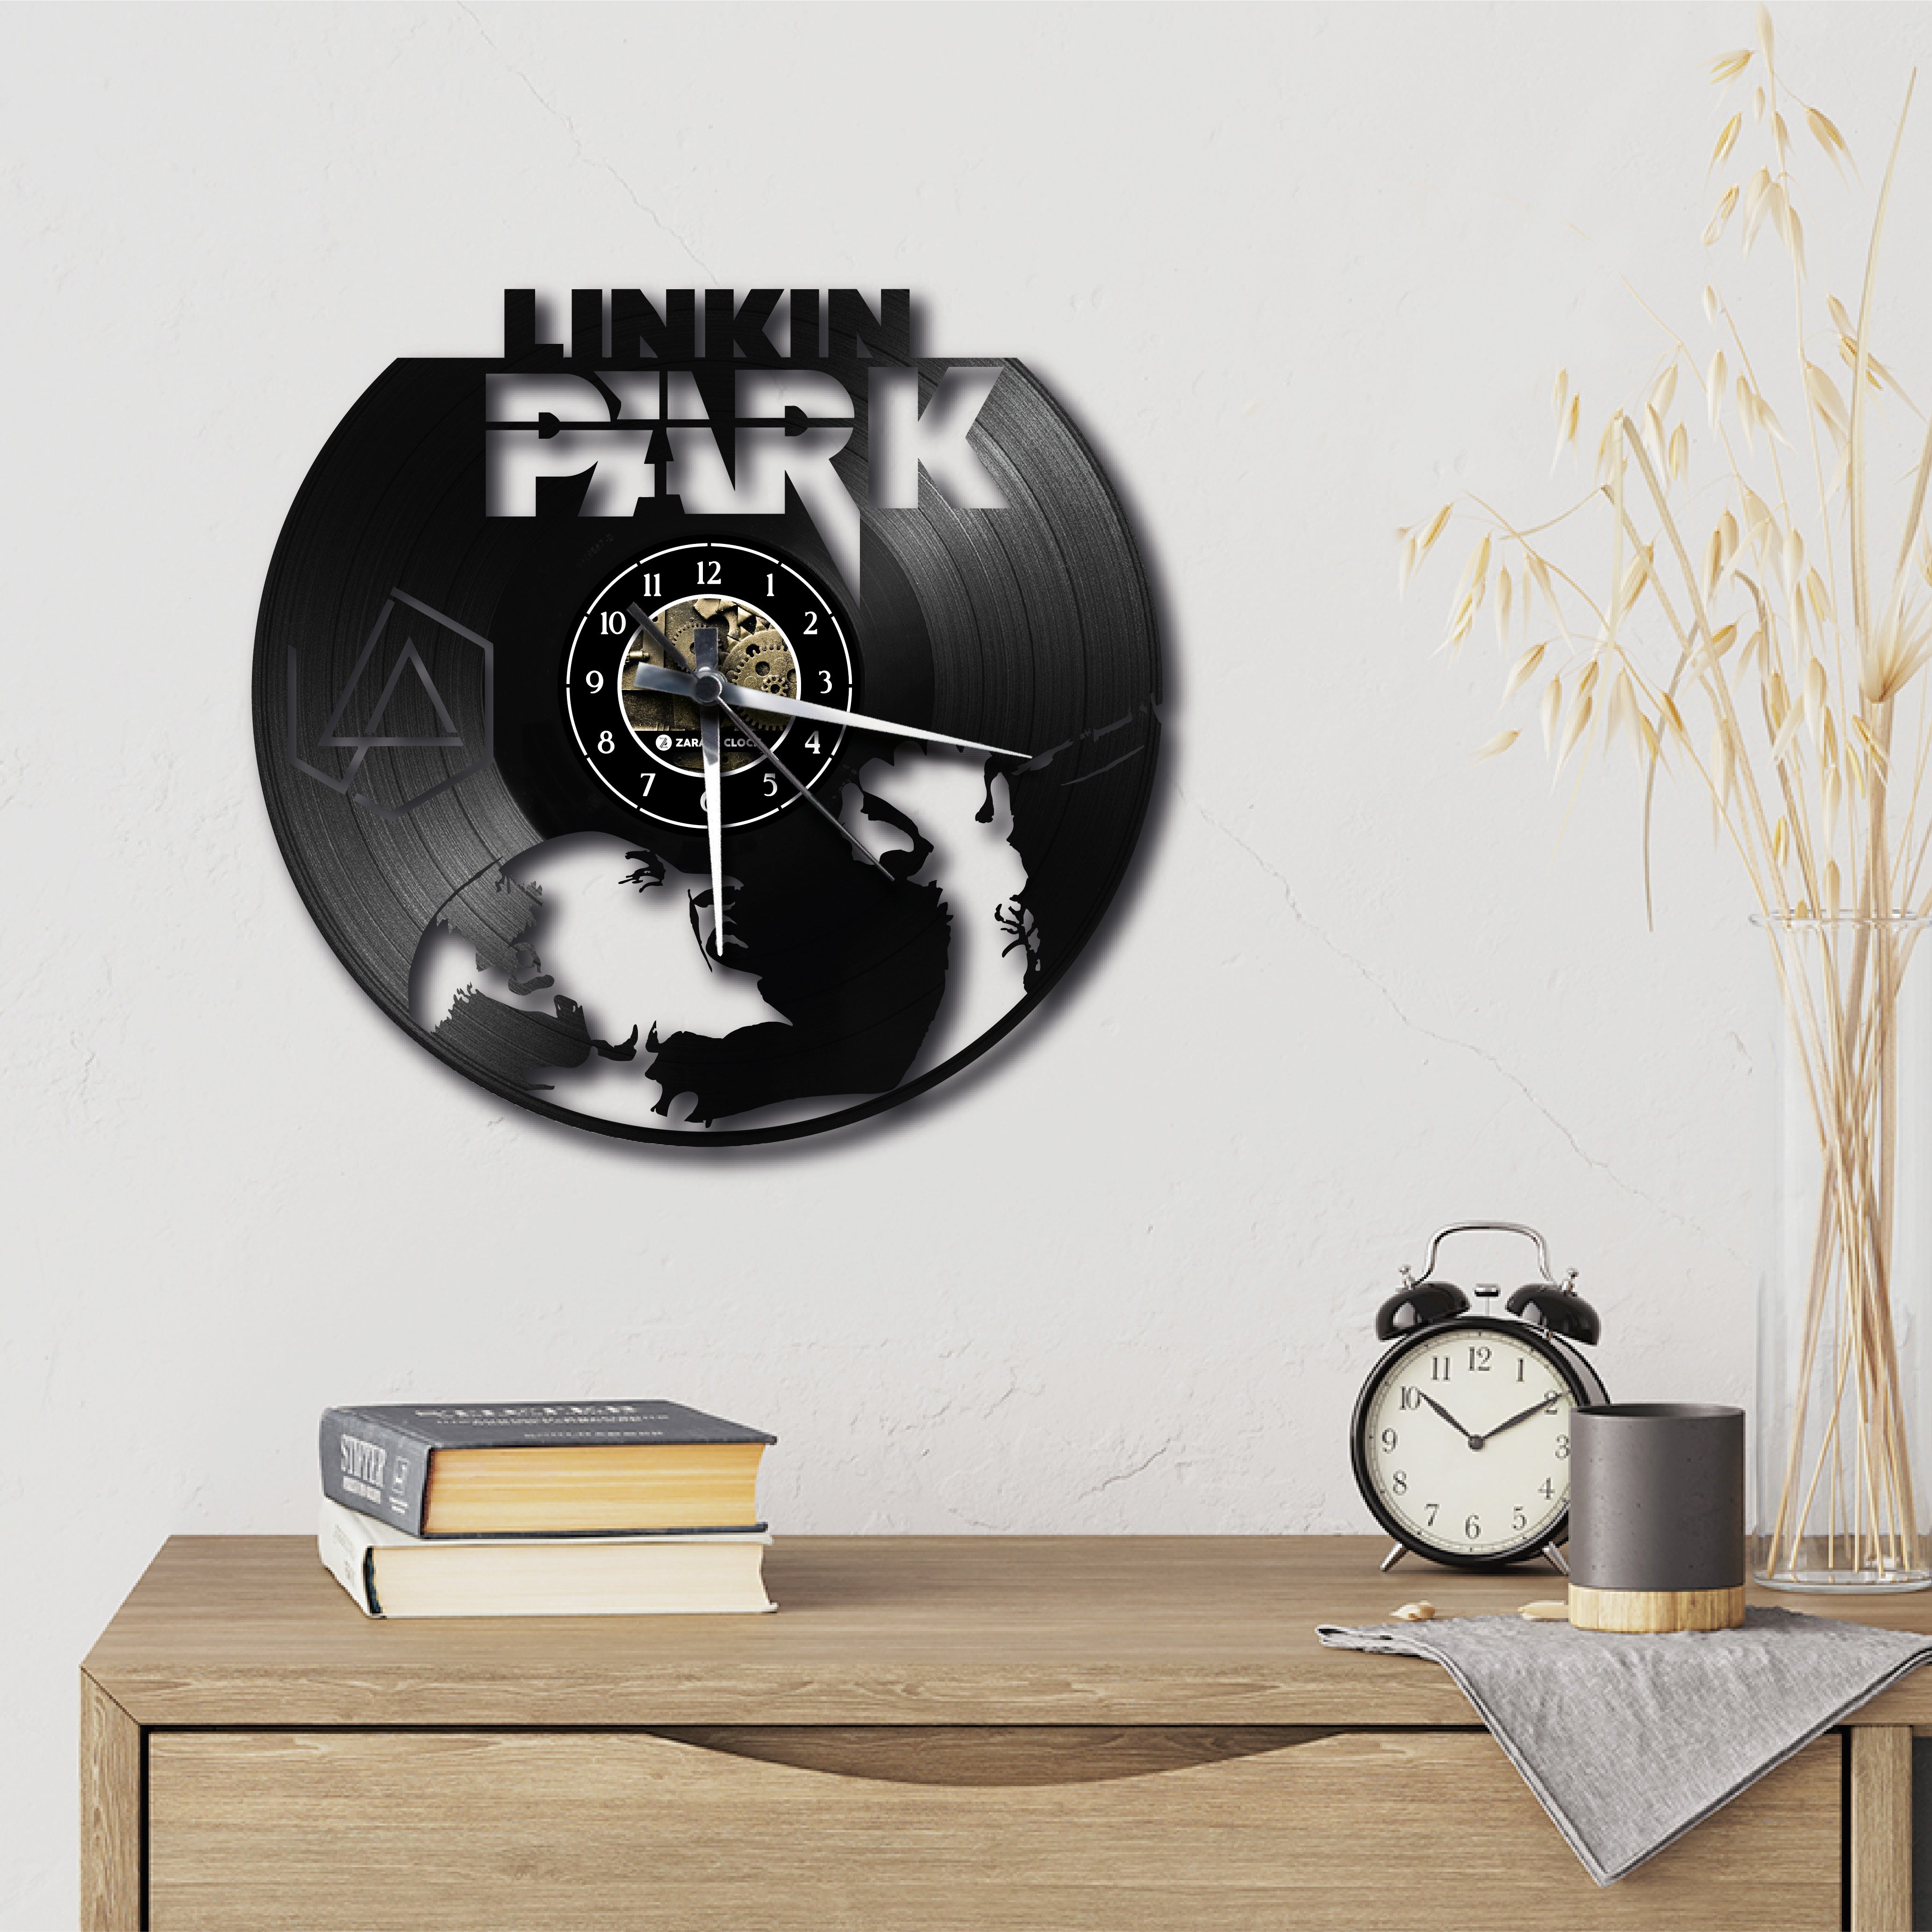 LINKIN PARK CHESTER ✦ orologio in vinile